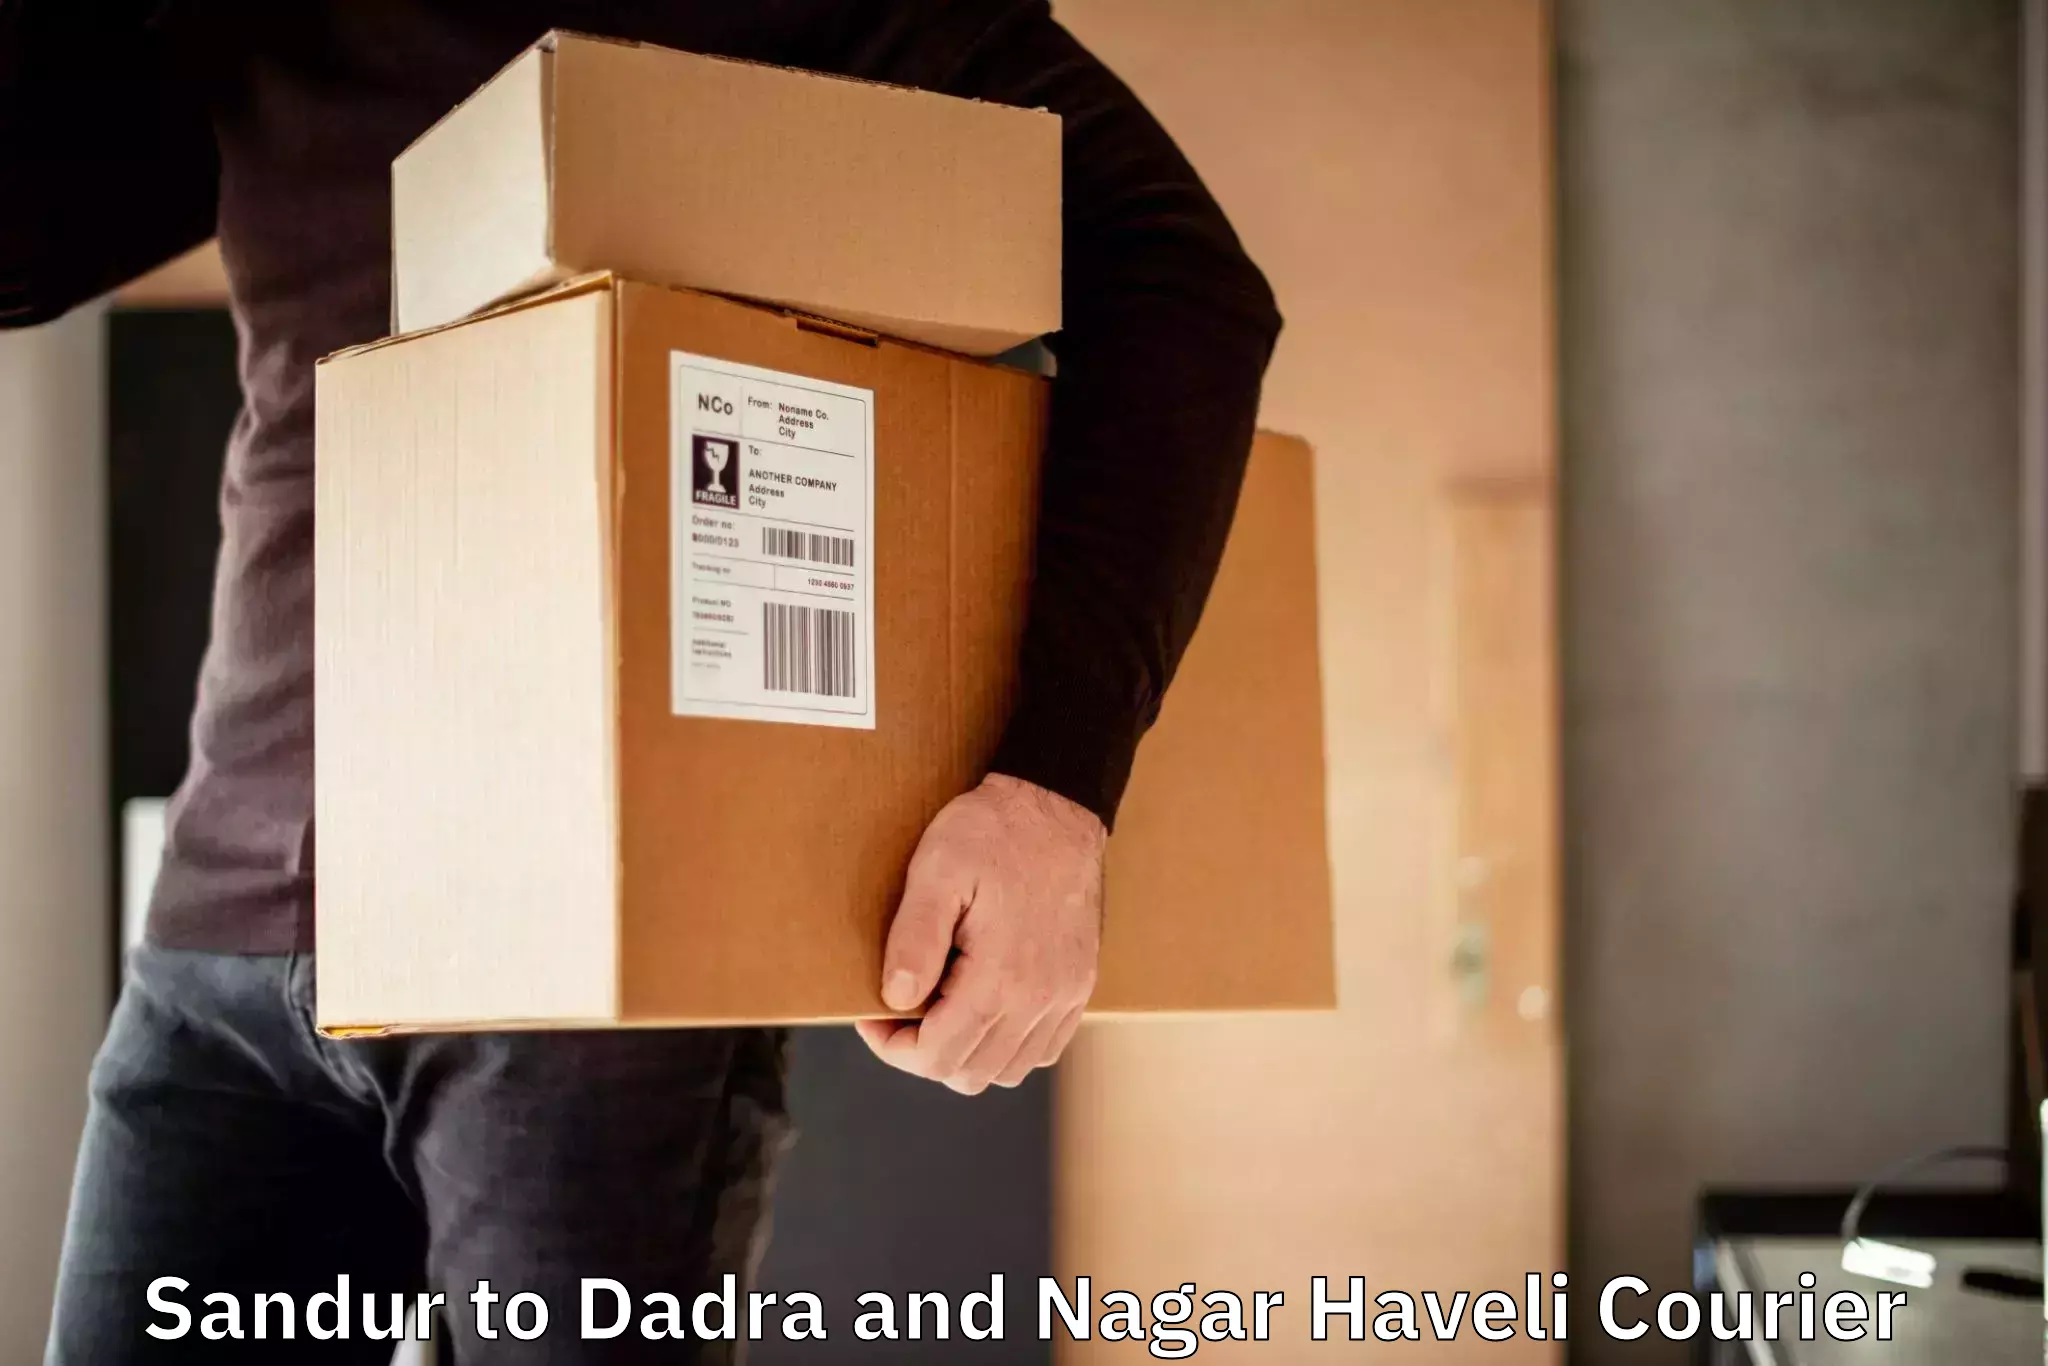 Individual parcel service Sandur to Silvassa